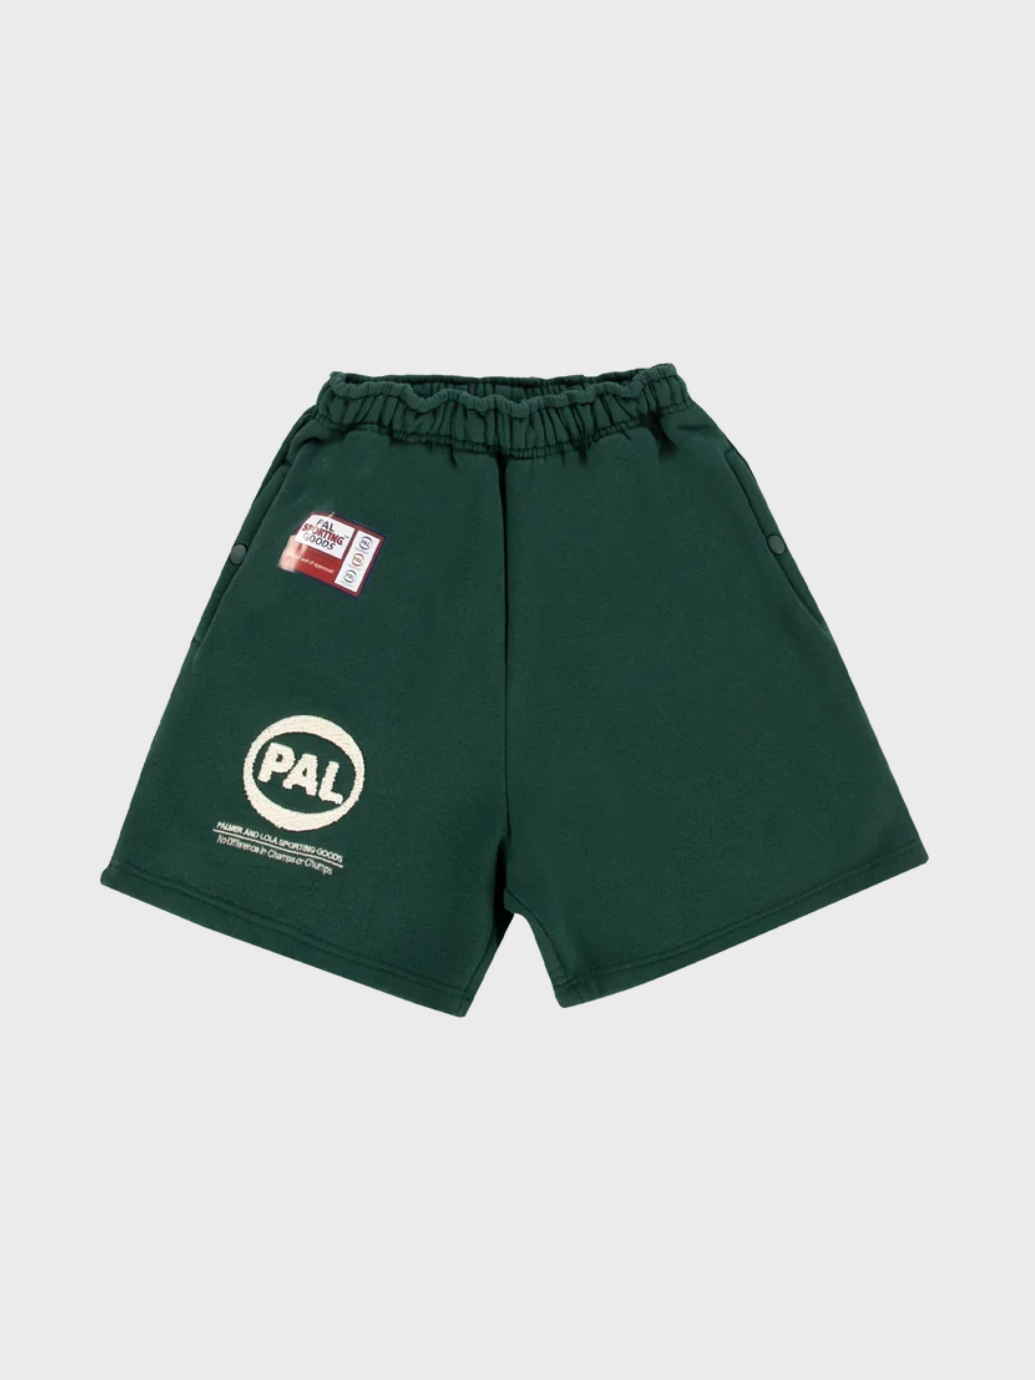 New TM Shorts